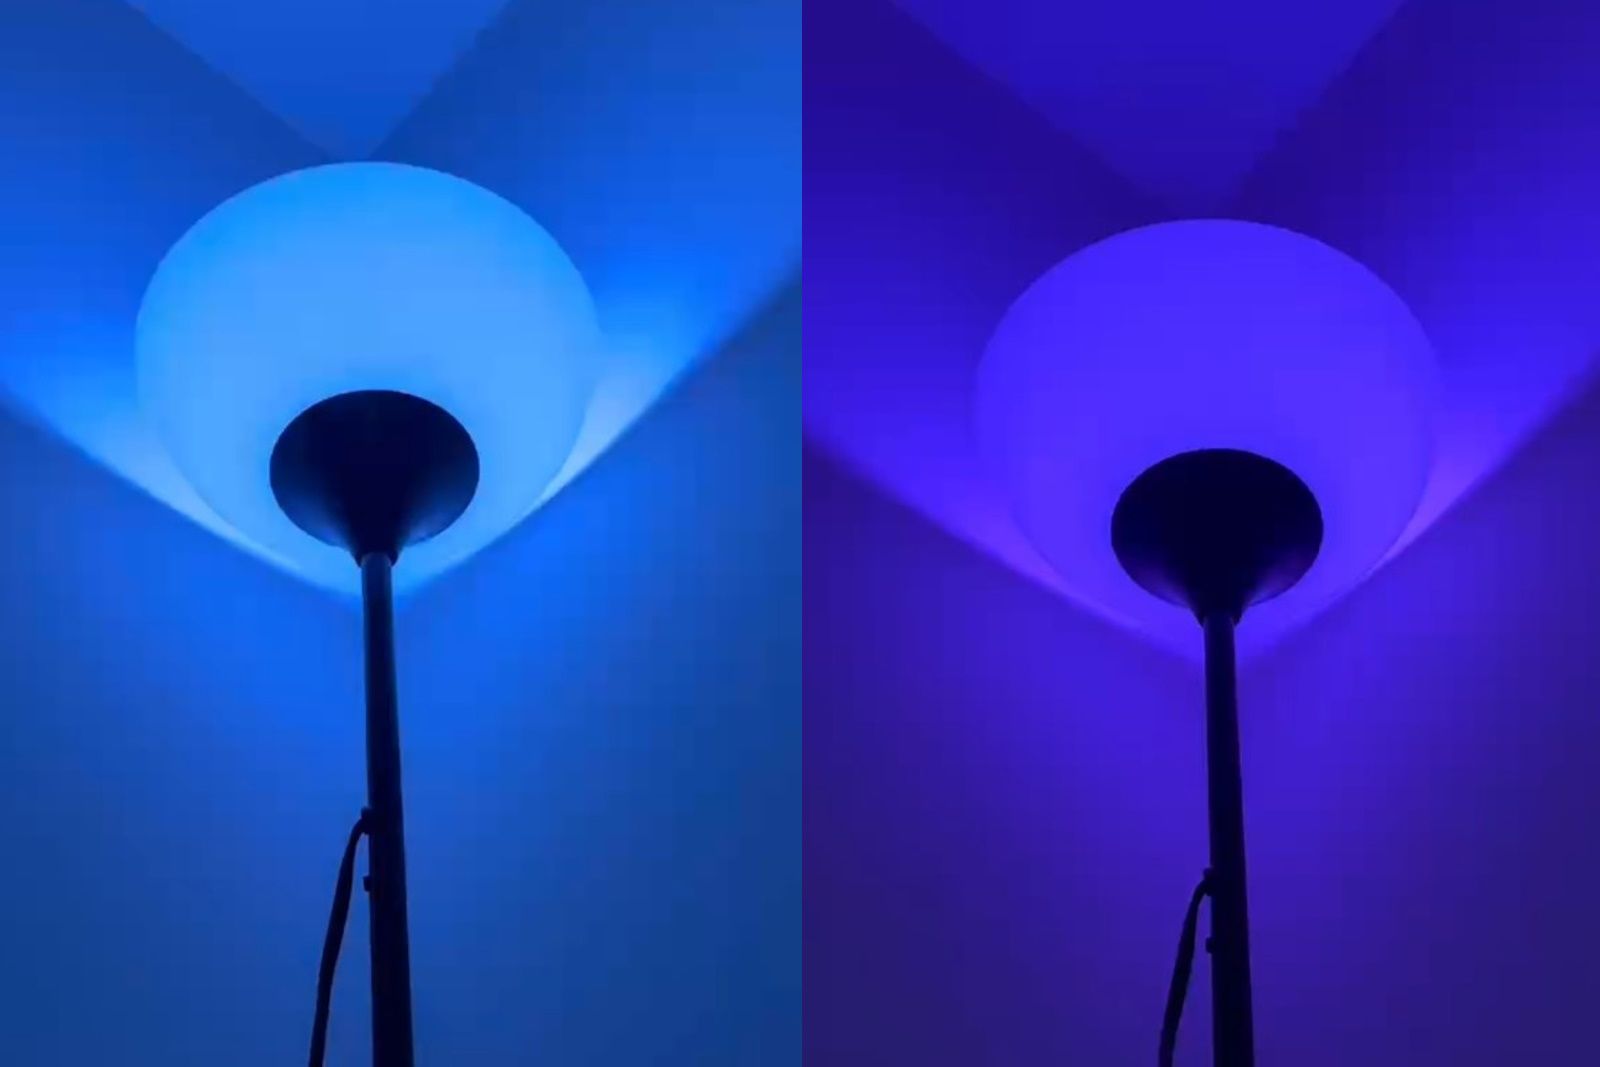 aidot smart bulbs in various blue lighting colors